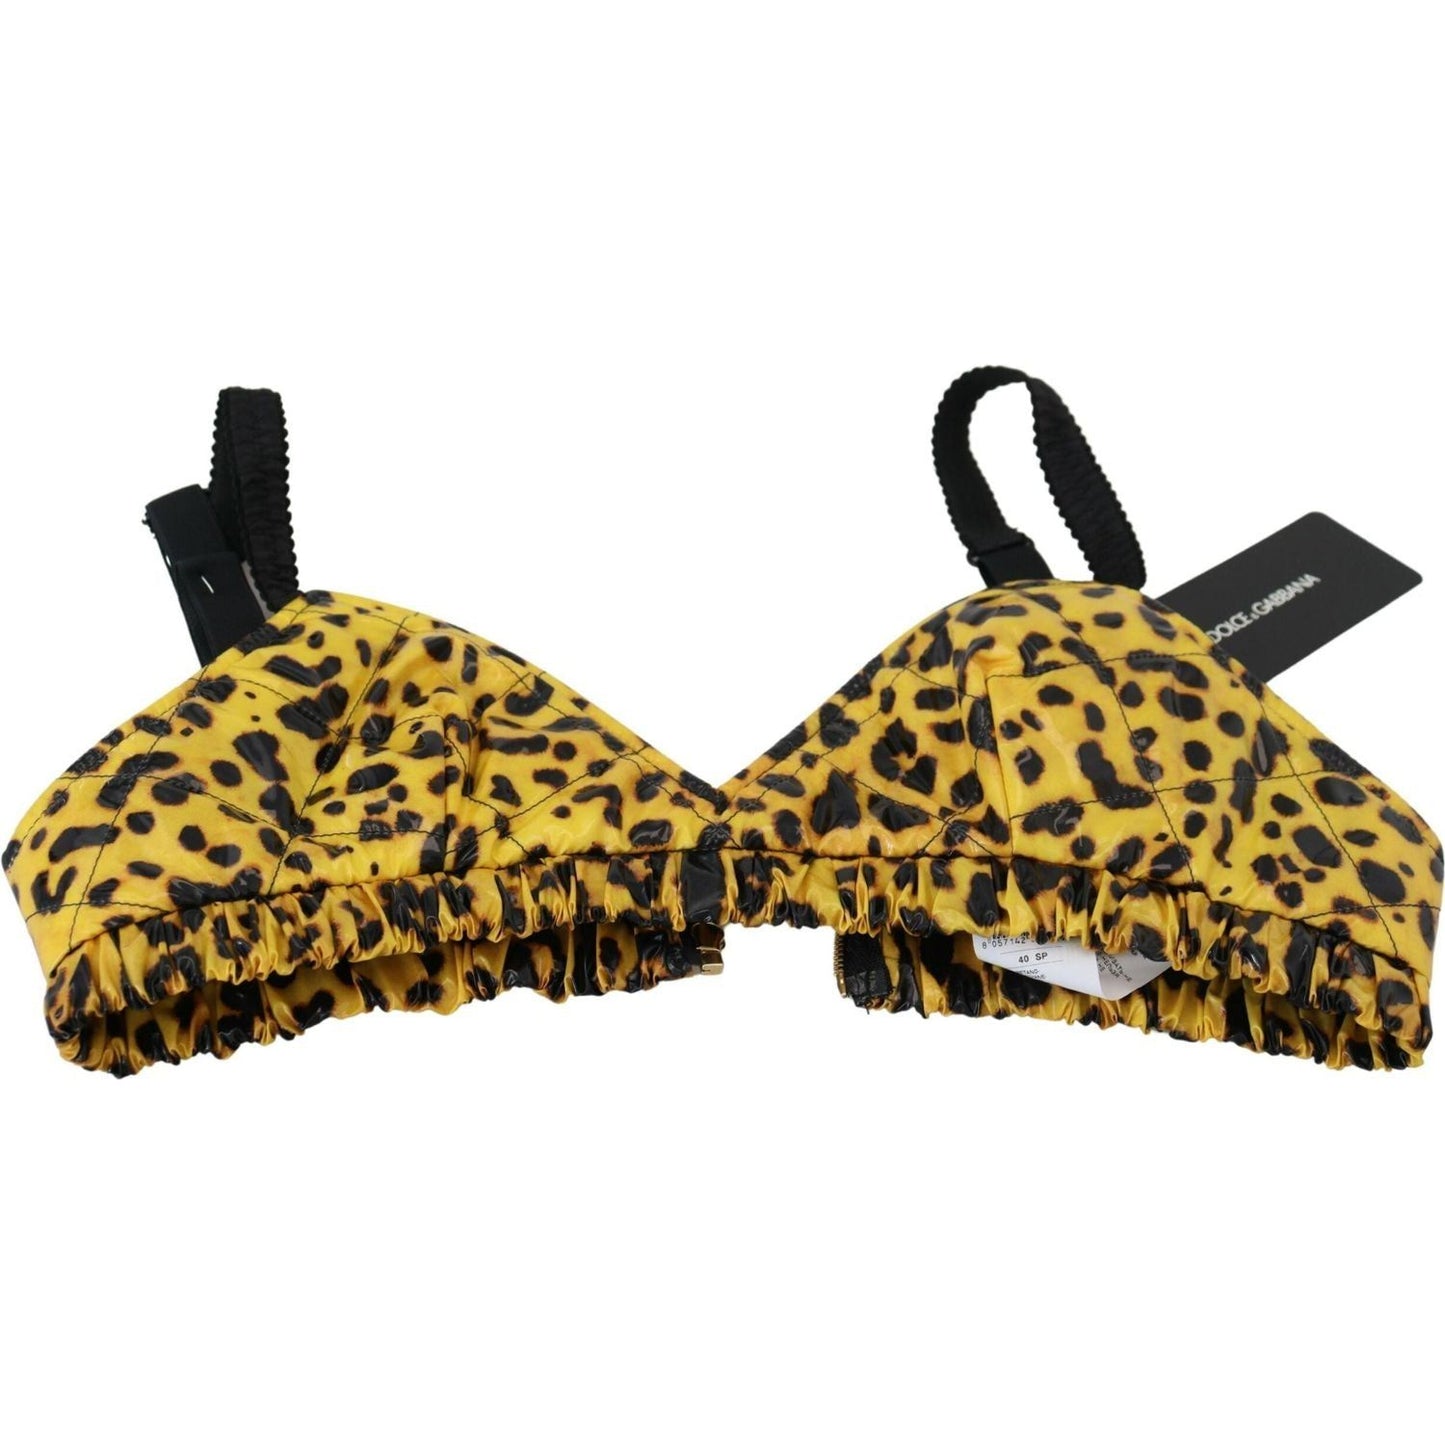 Dolce & Gabbana Chic Leopard Print Sleeveless Corset Top yellow-leopard-cropped-bustier-corset-bra-top IMG_0662-scaled-1d776fea-28d.jpg